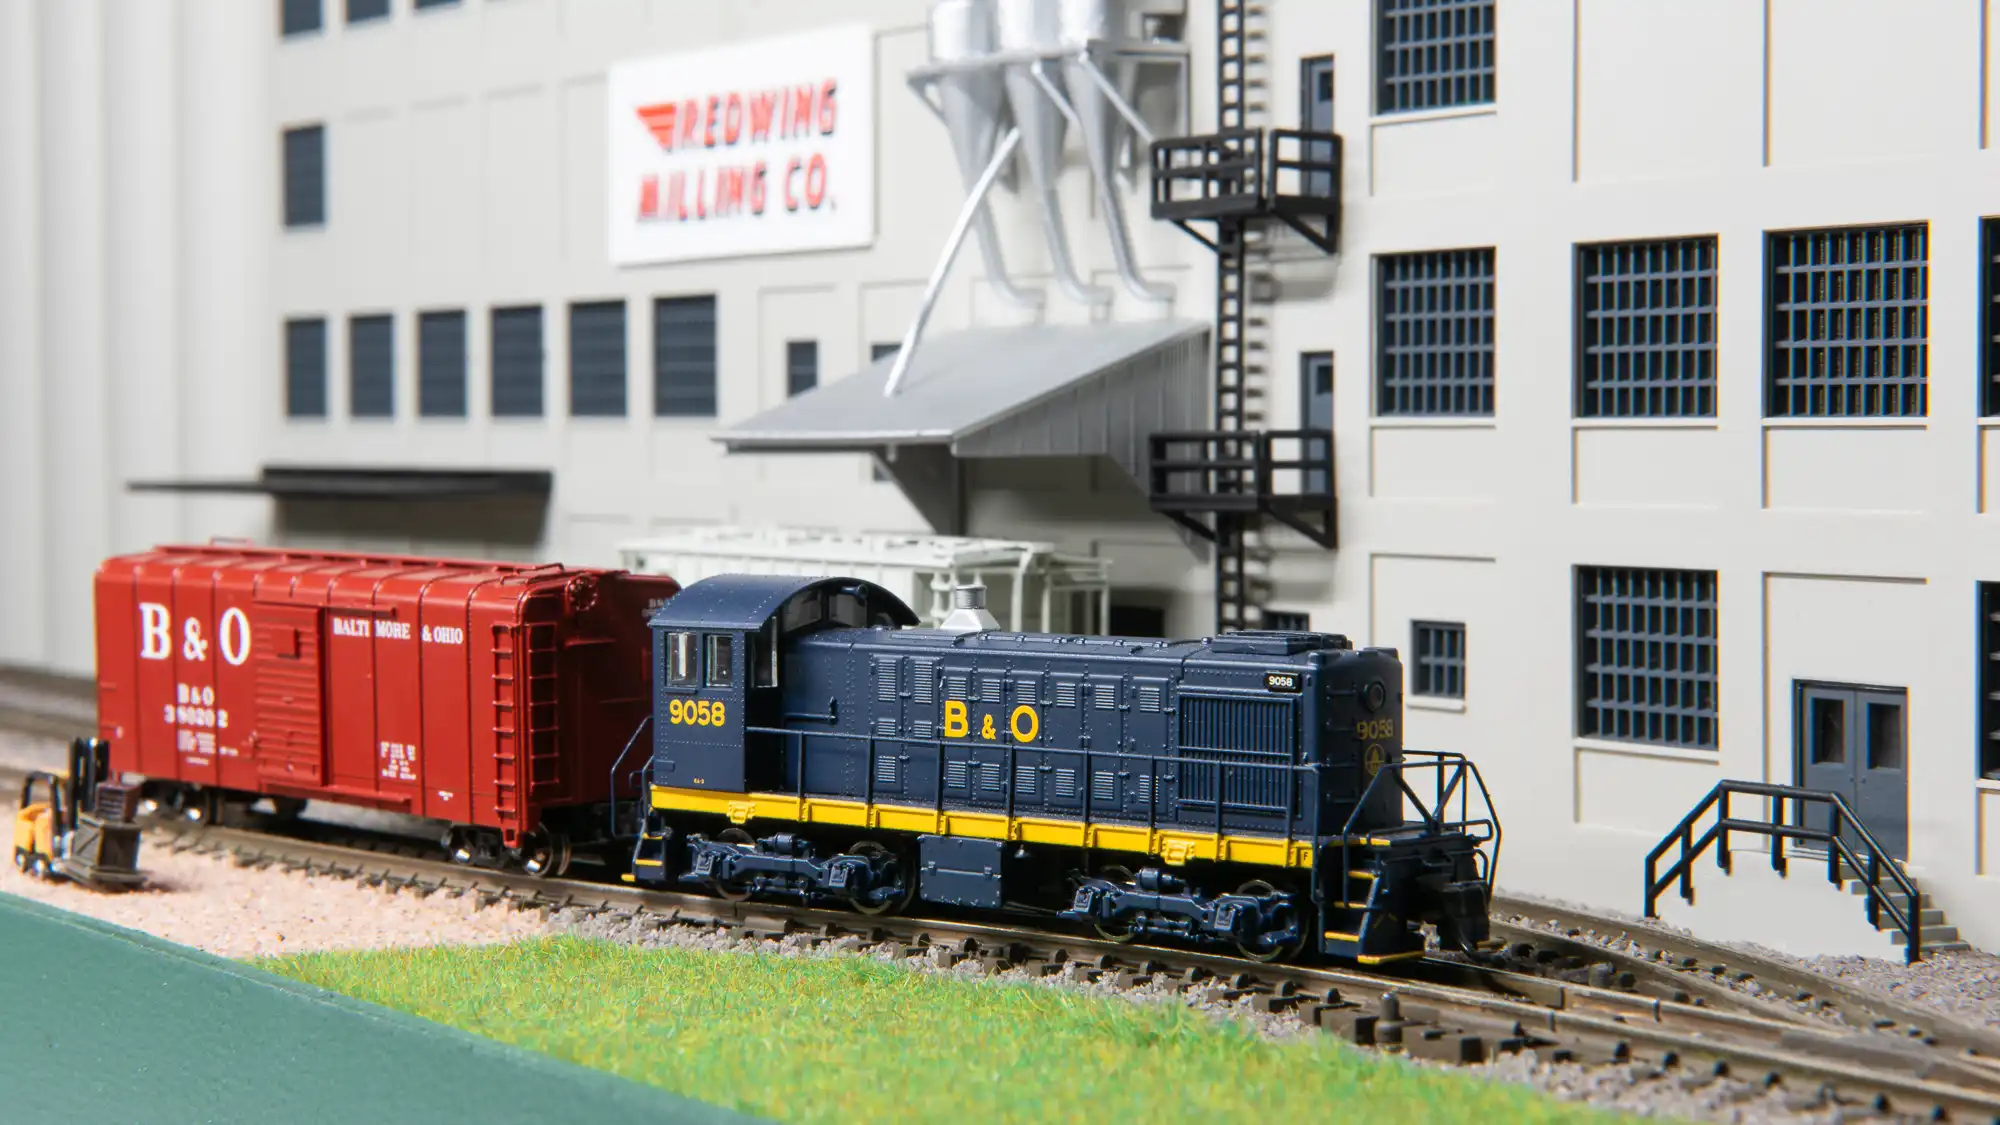 For model railroaders, by model railroaders.